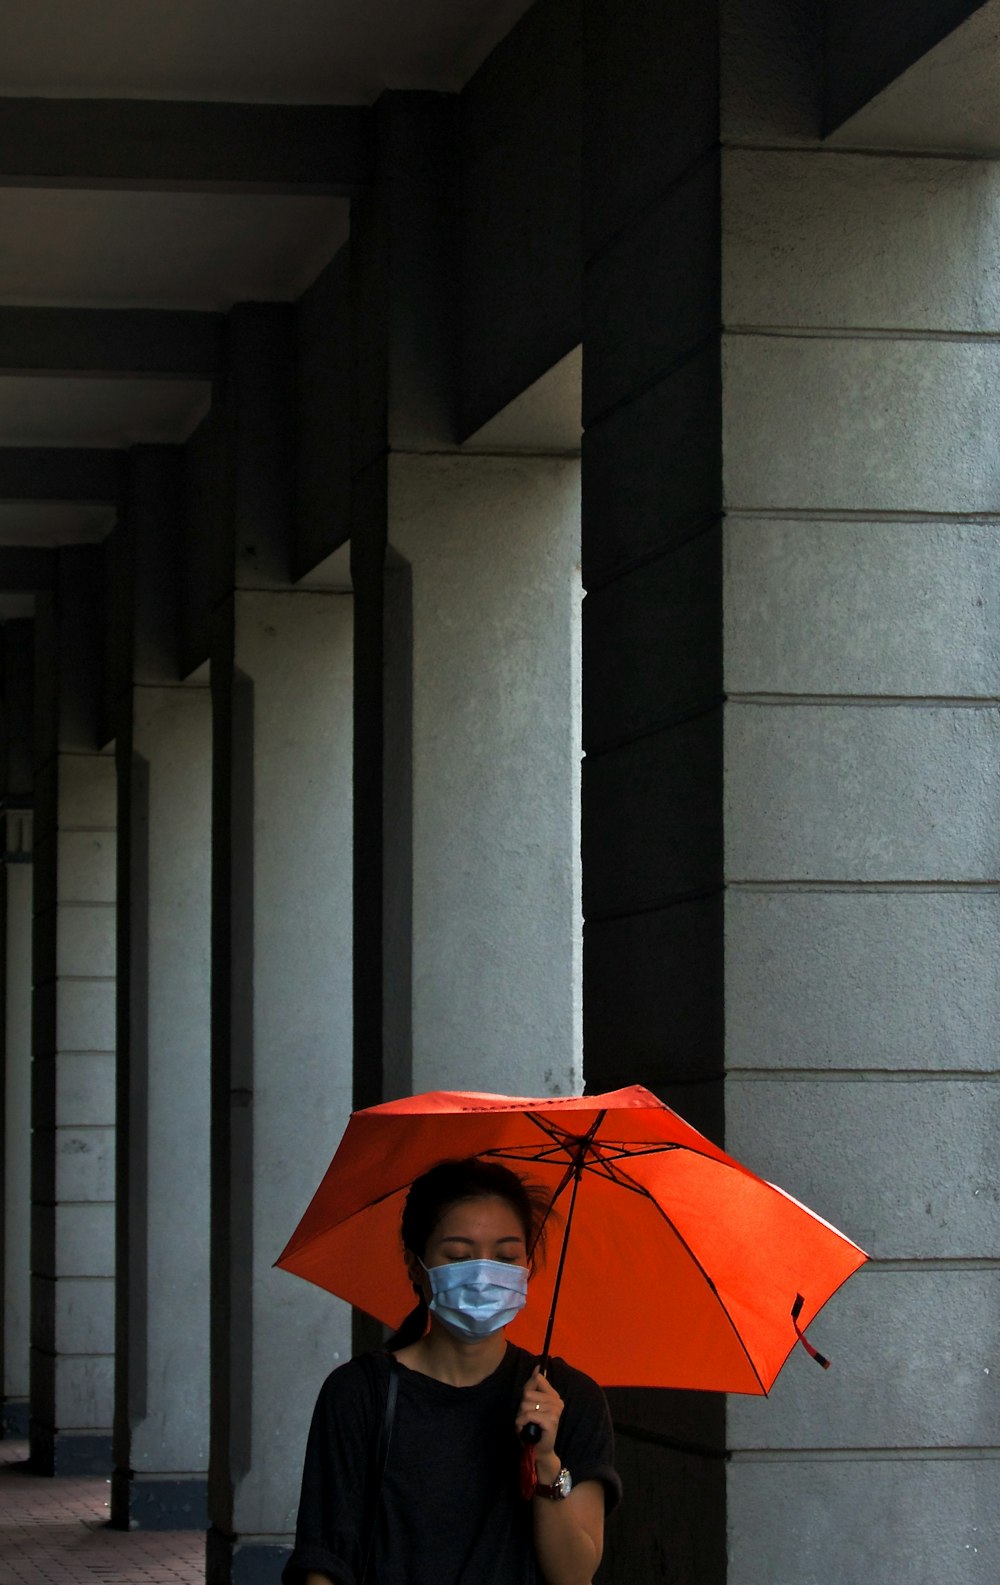 Damenregenschirm neben Pfosten